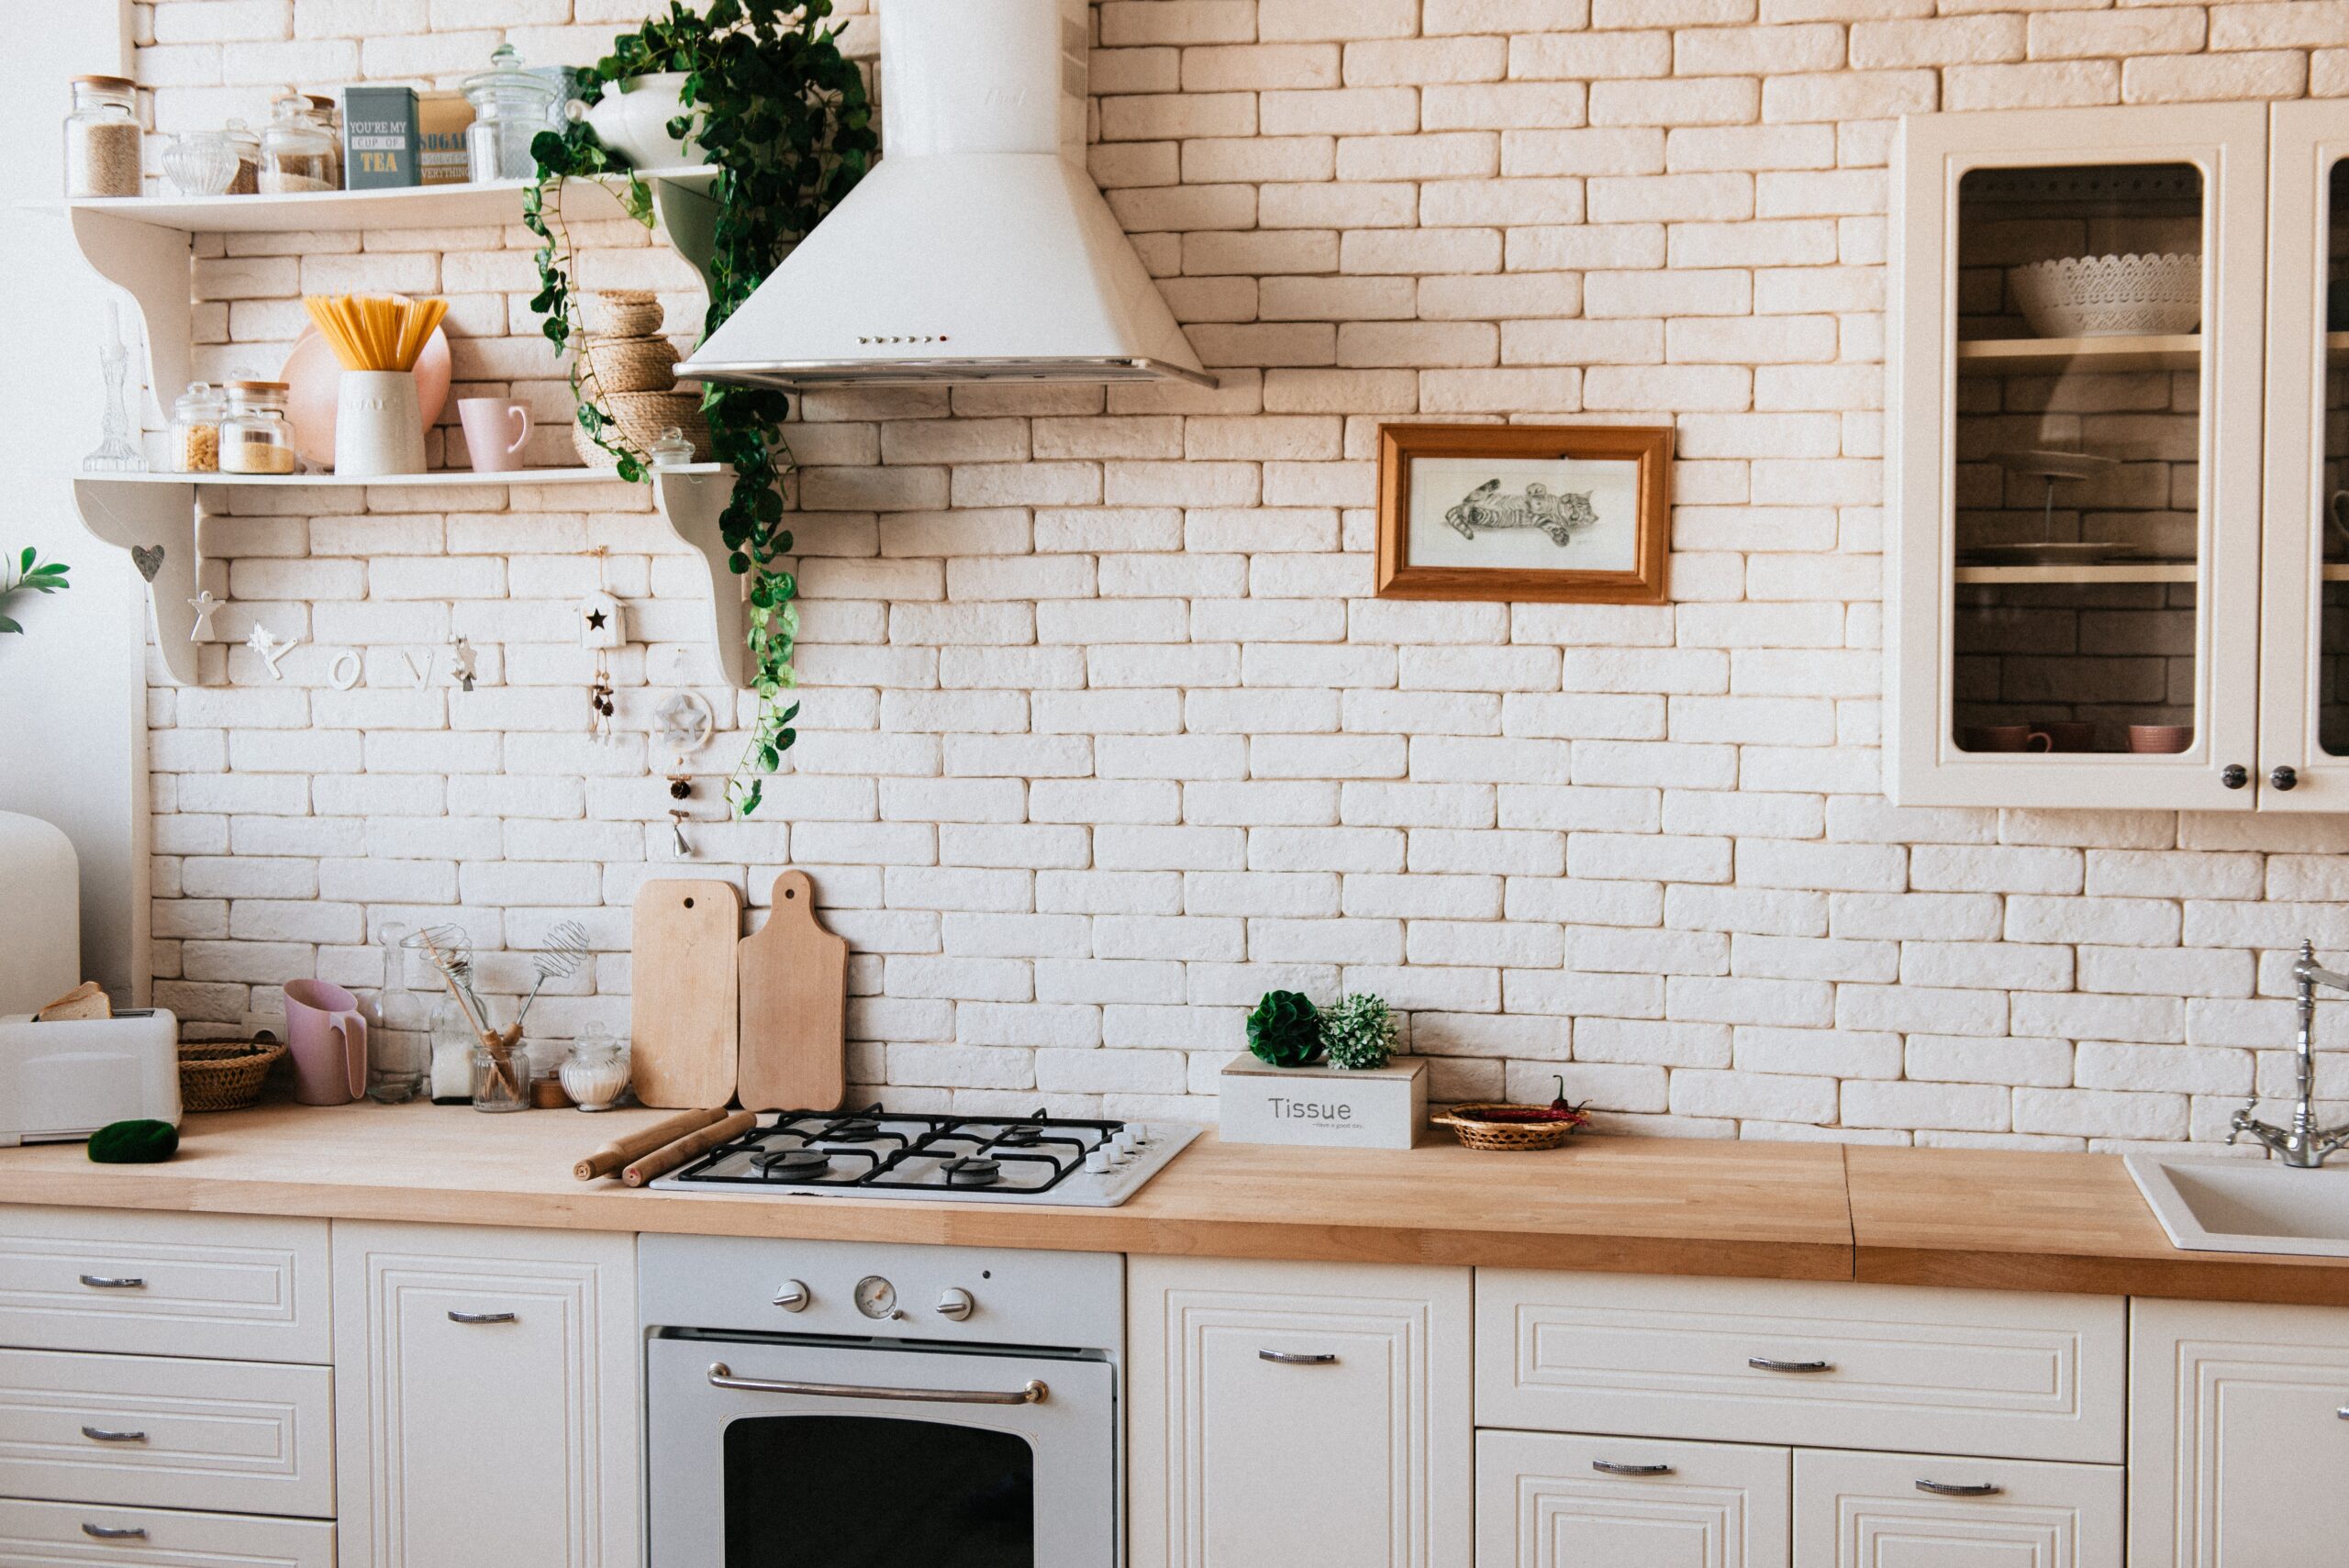 A bright kitchen with white brick walls